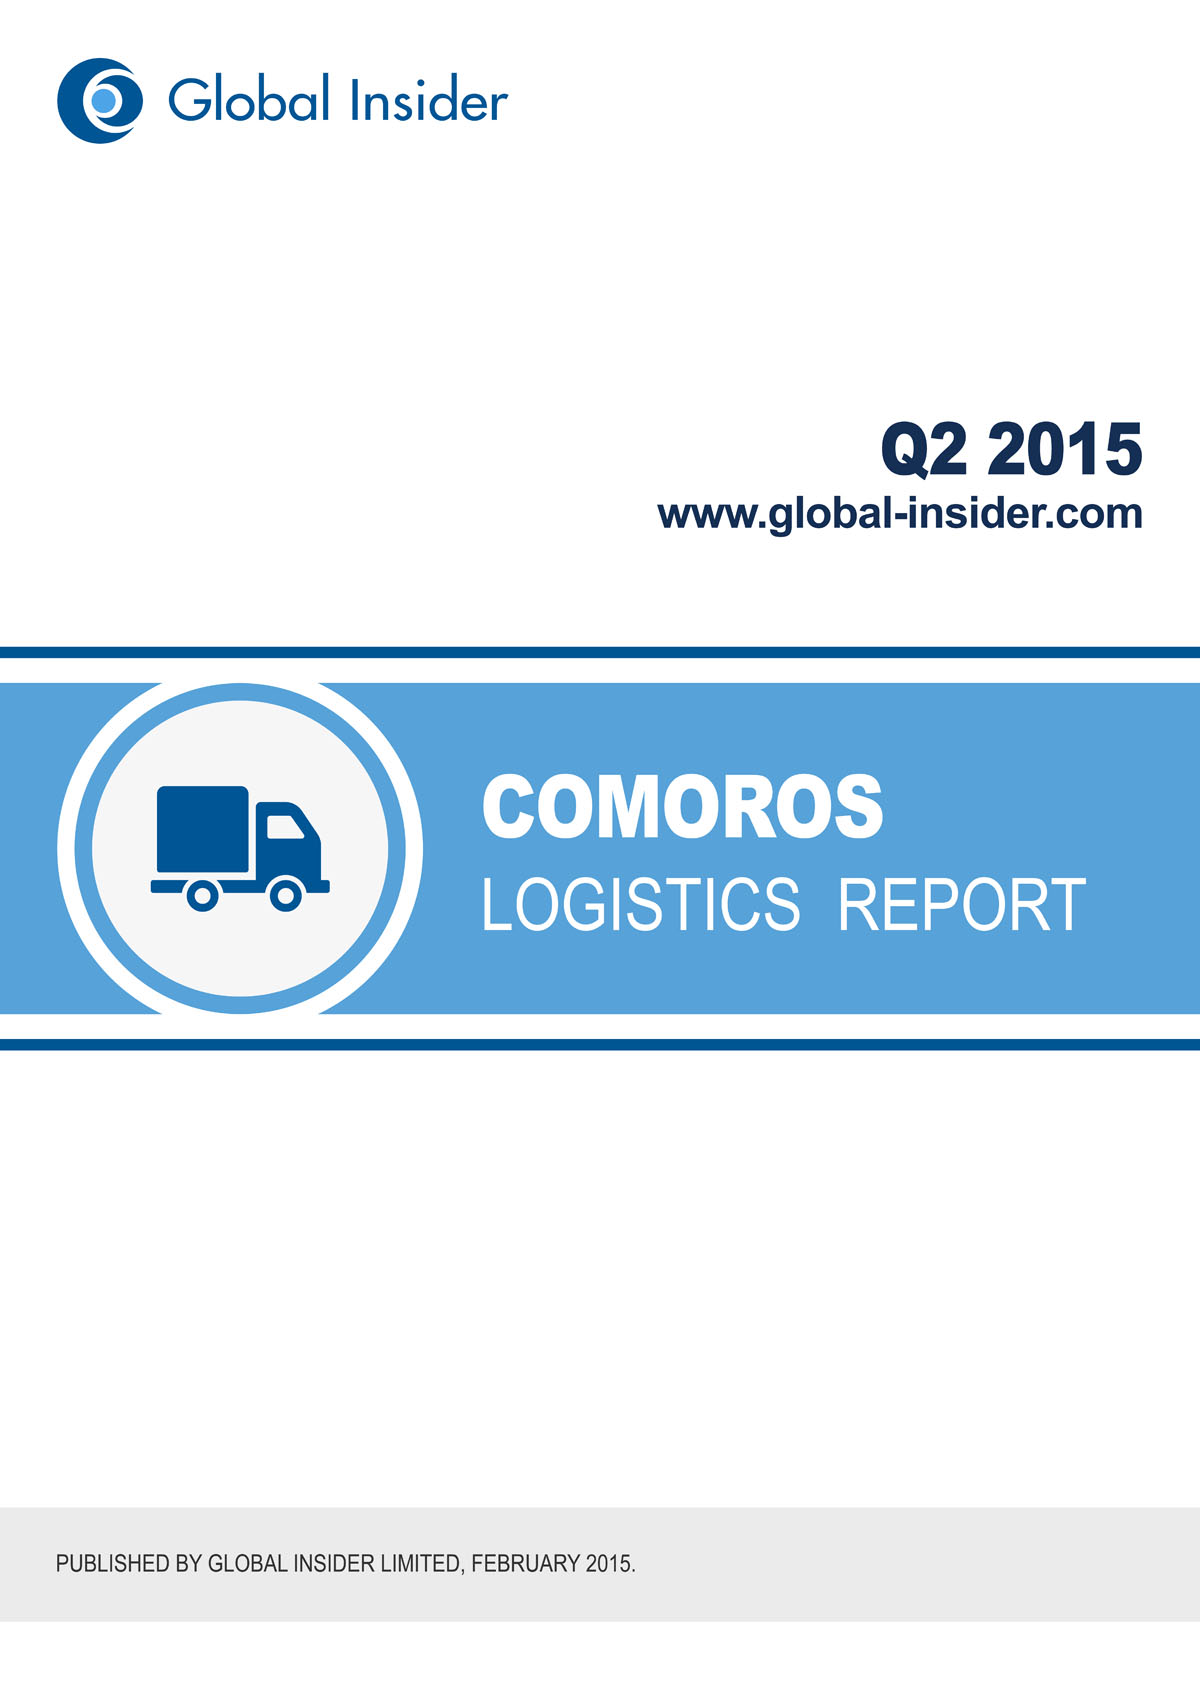 Comoros Logistics Report